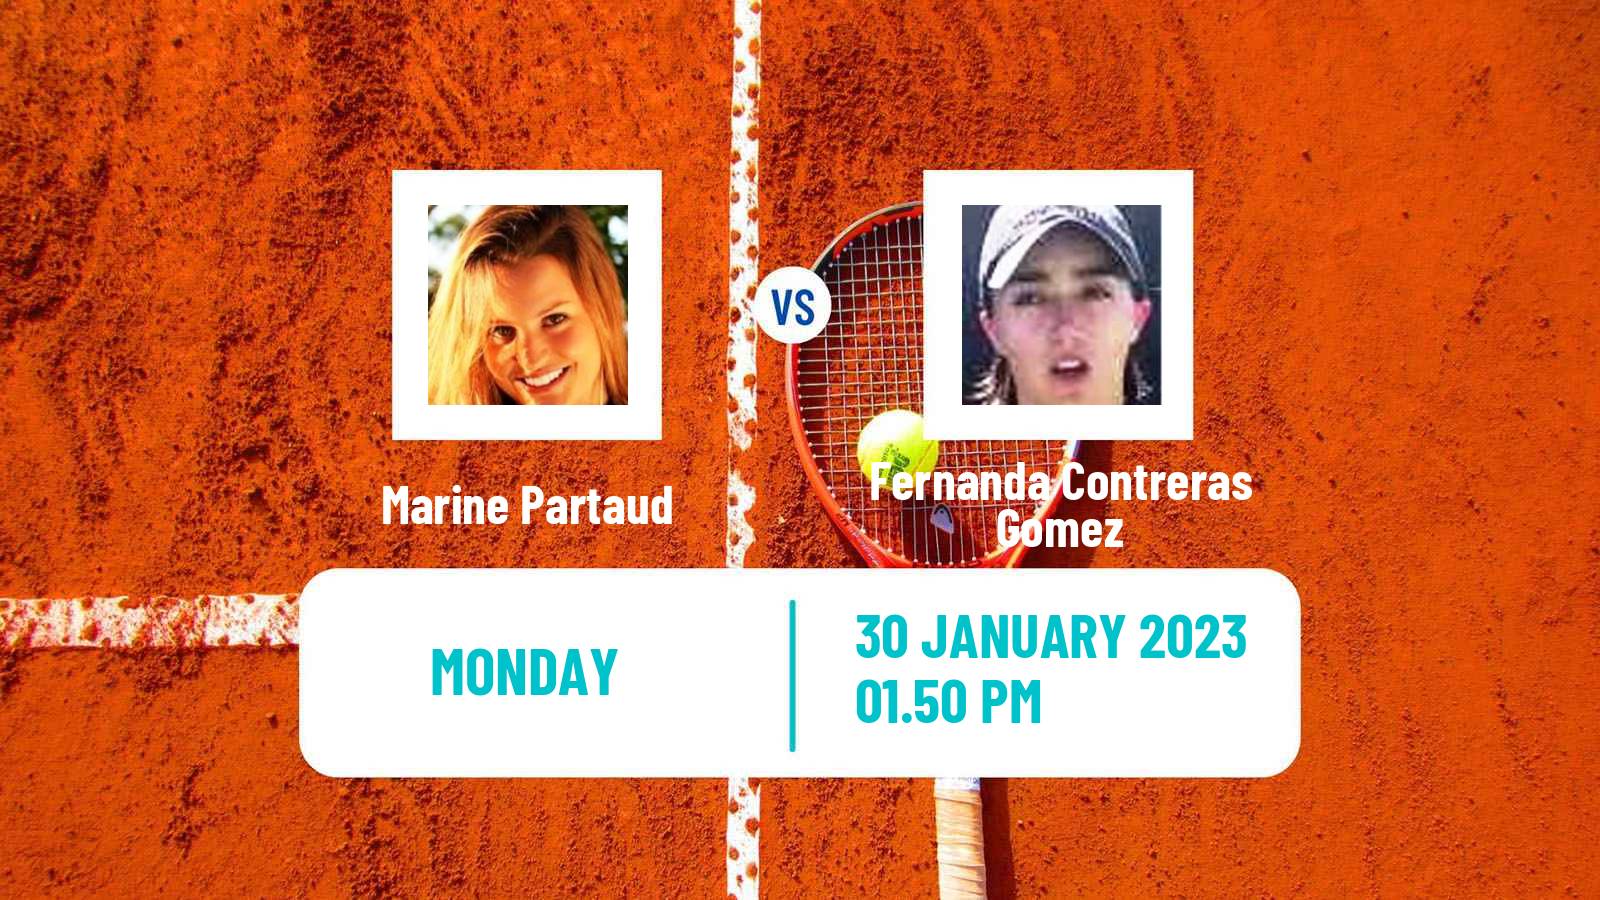 Tennis ATP Challenger Marine Partaud - Fernanda Contreras Gomez